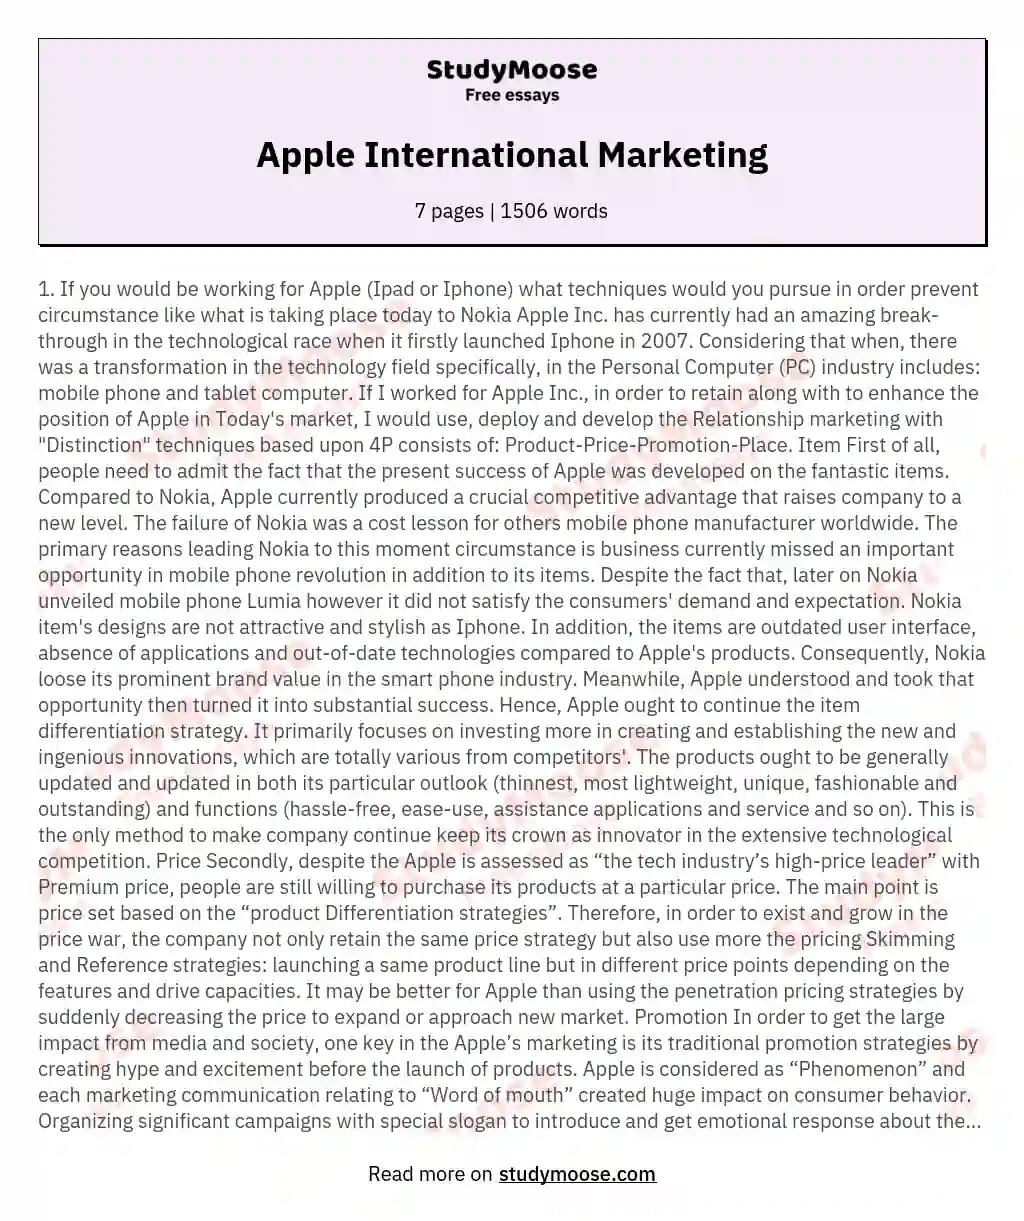 Apple International Marketing essay